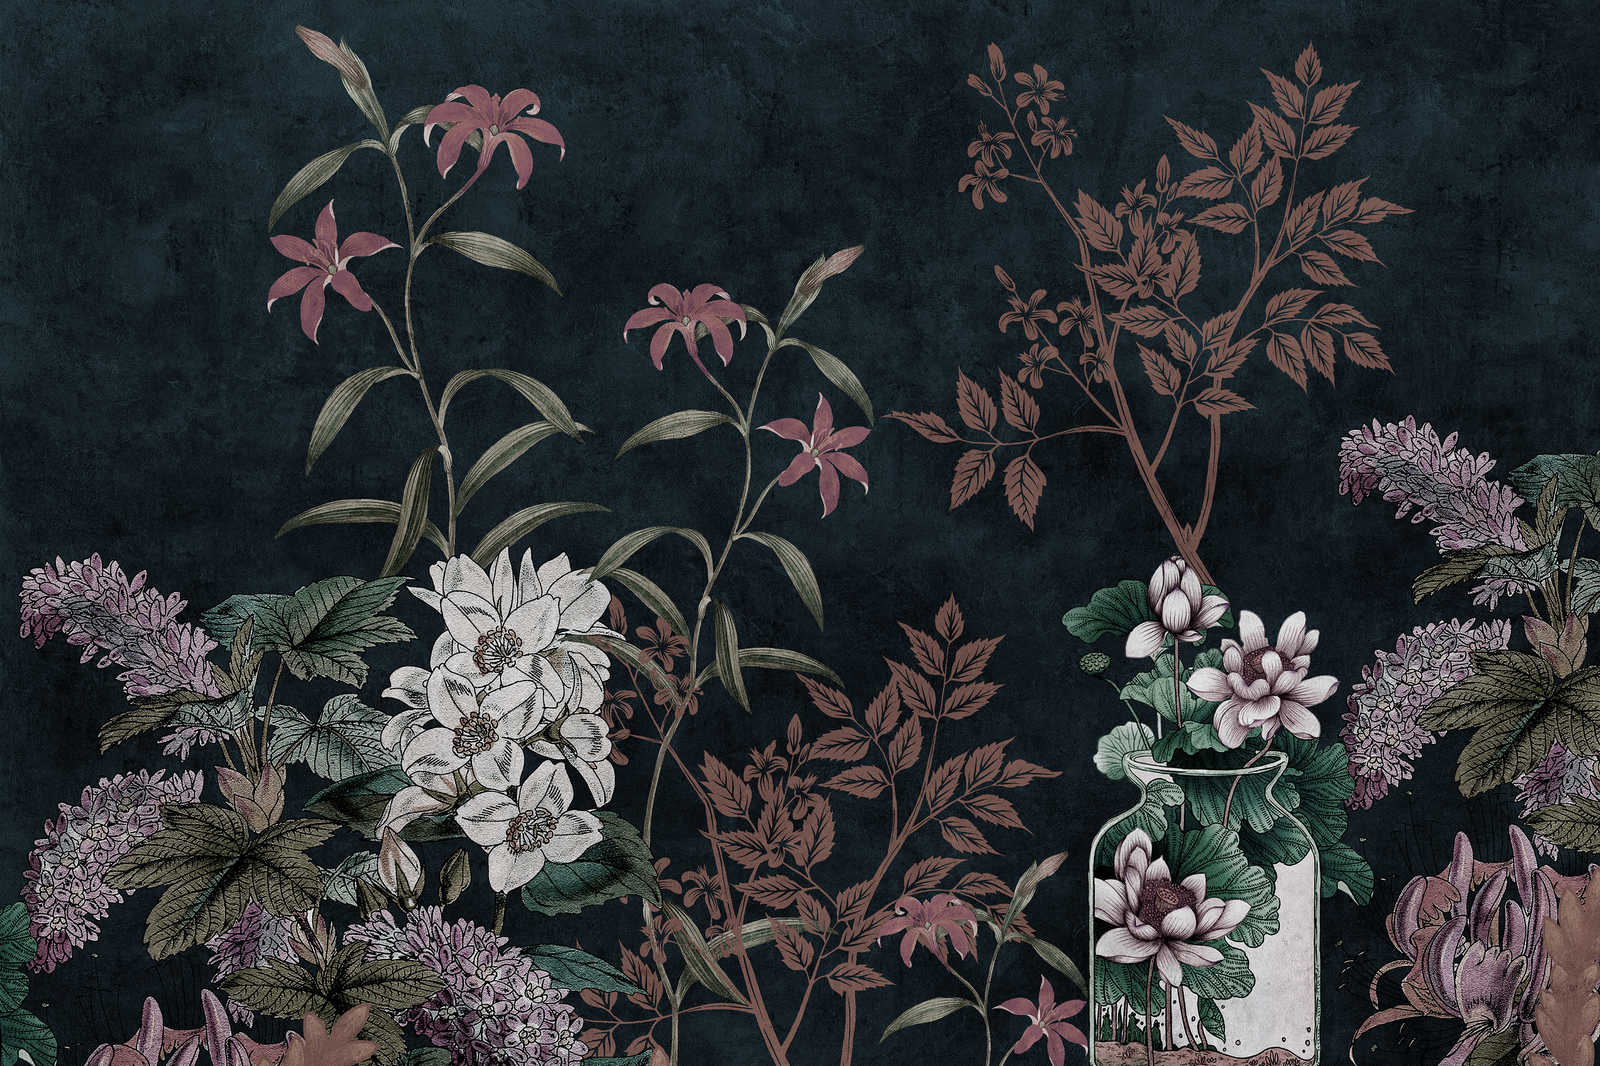             Dark Room 2 - Black Canvas Painting Botanical Pattern Pink - 1.20 m x 0.80 m
        